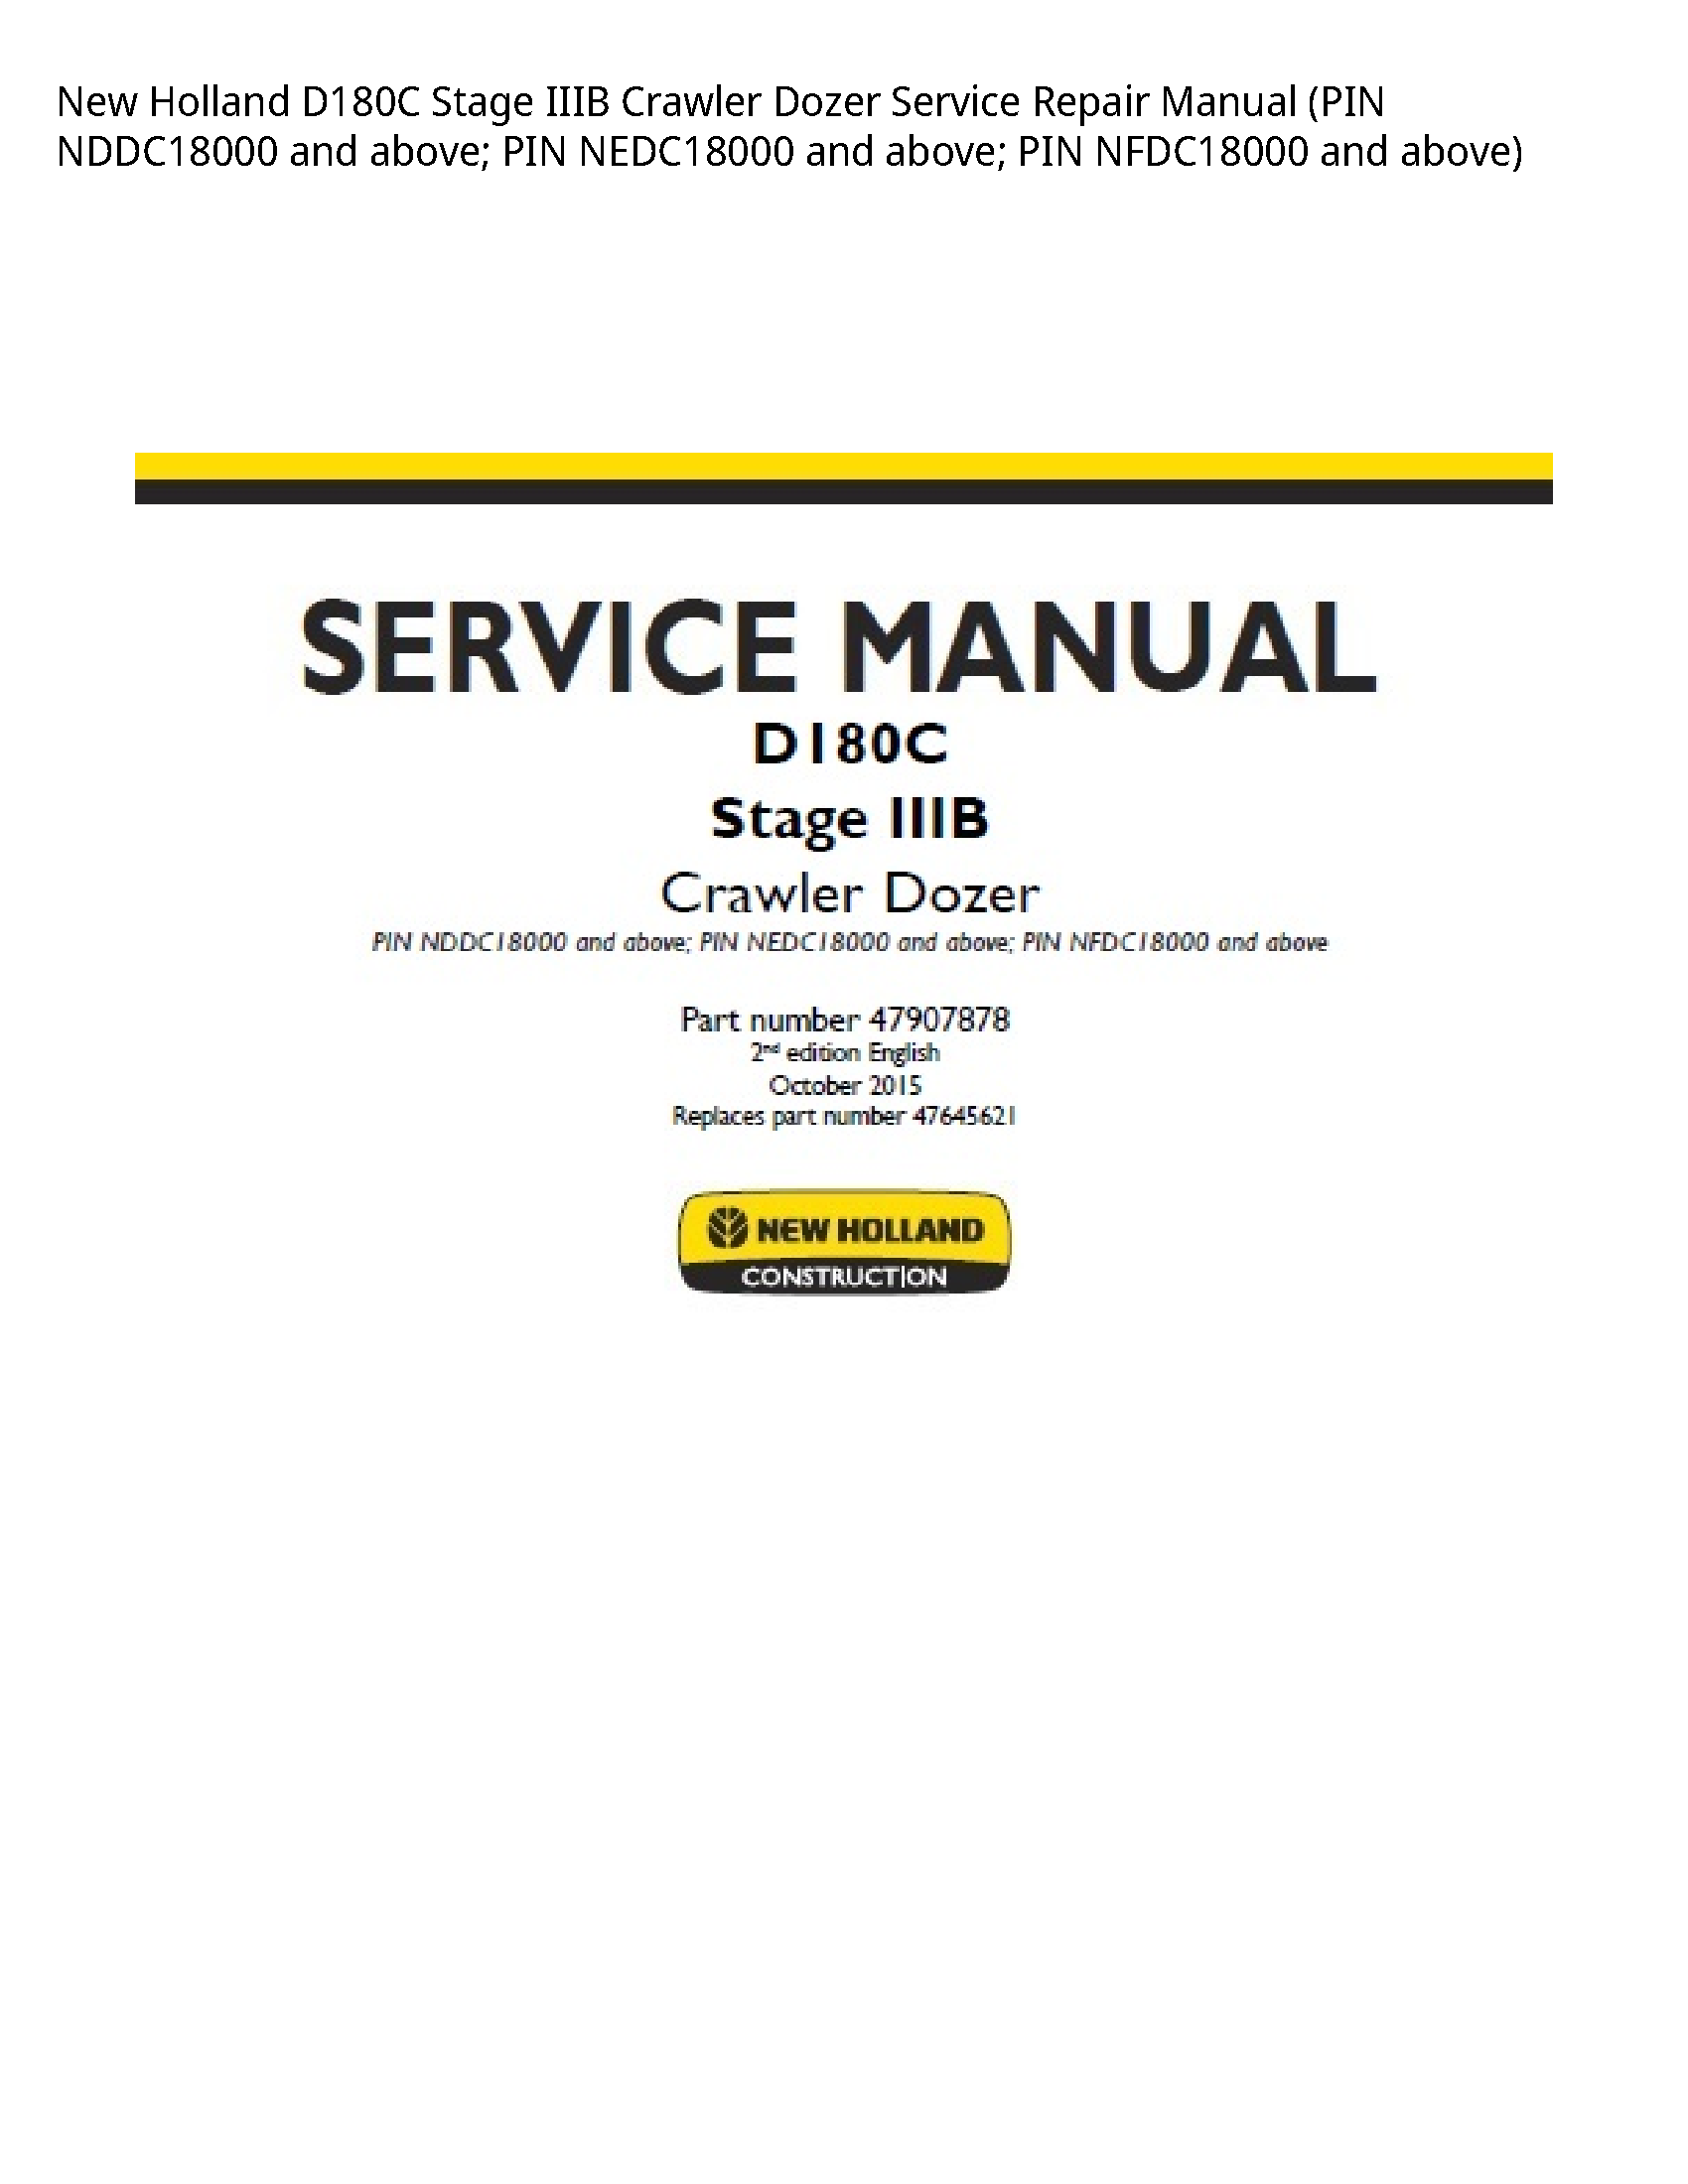 New Holland D180C Stage IIIB Crawler Dozer manual